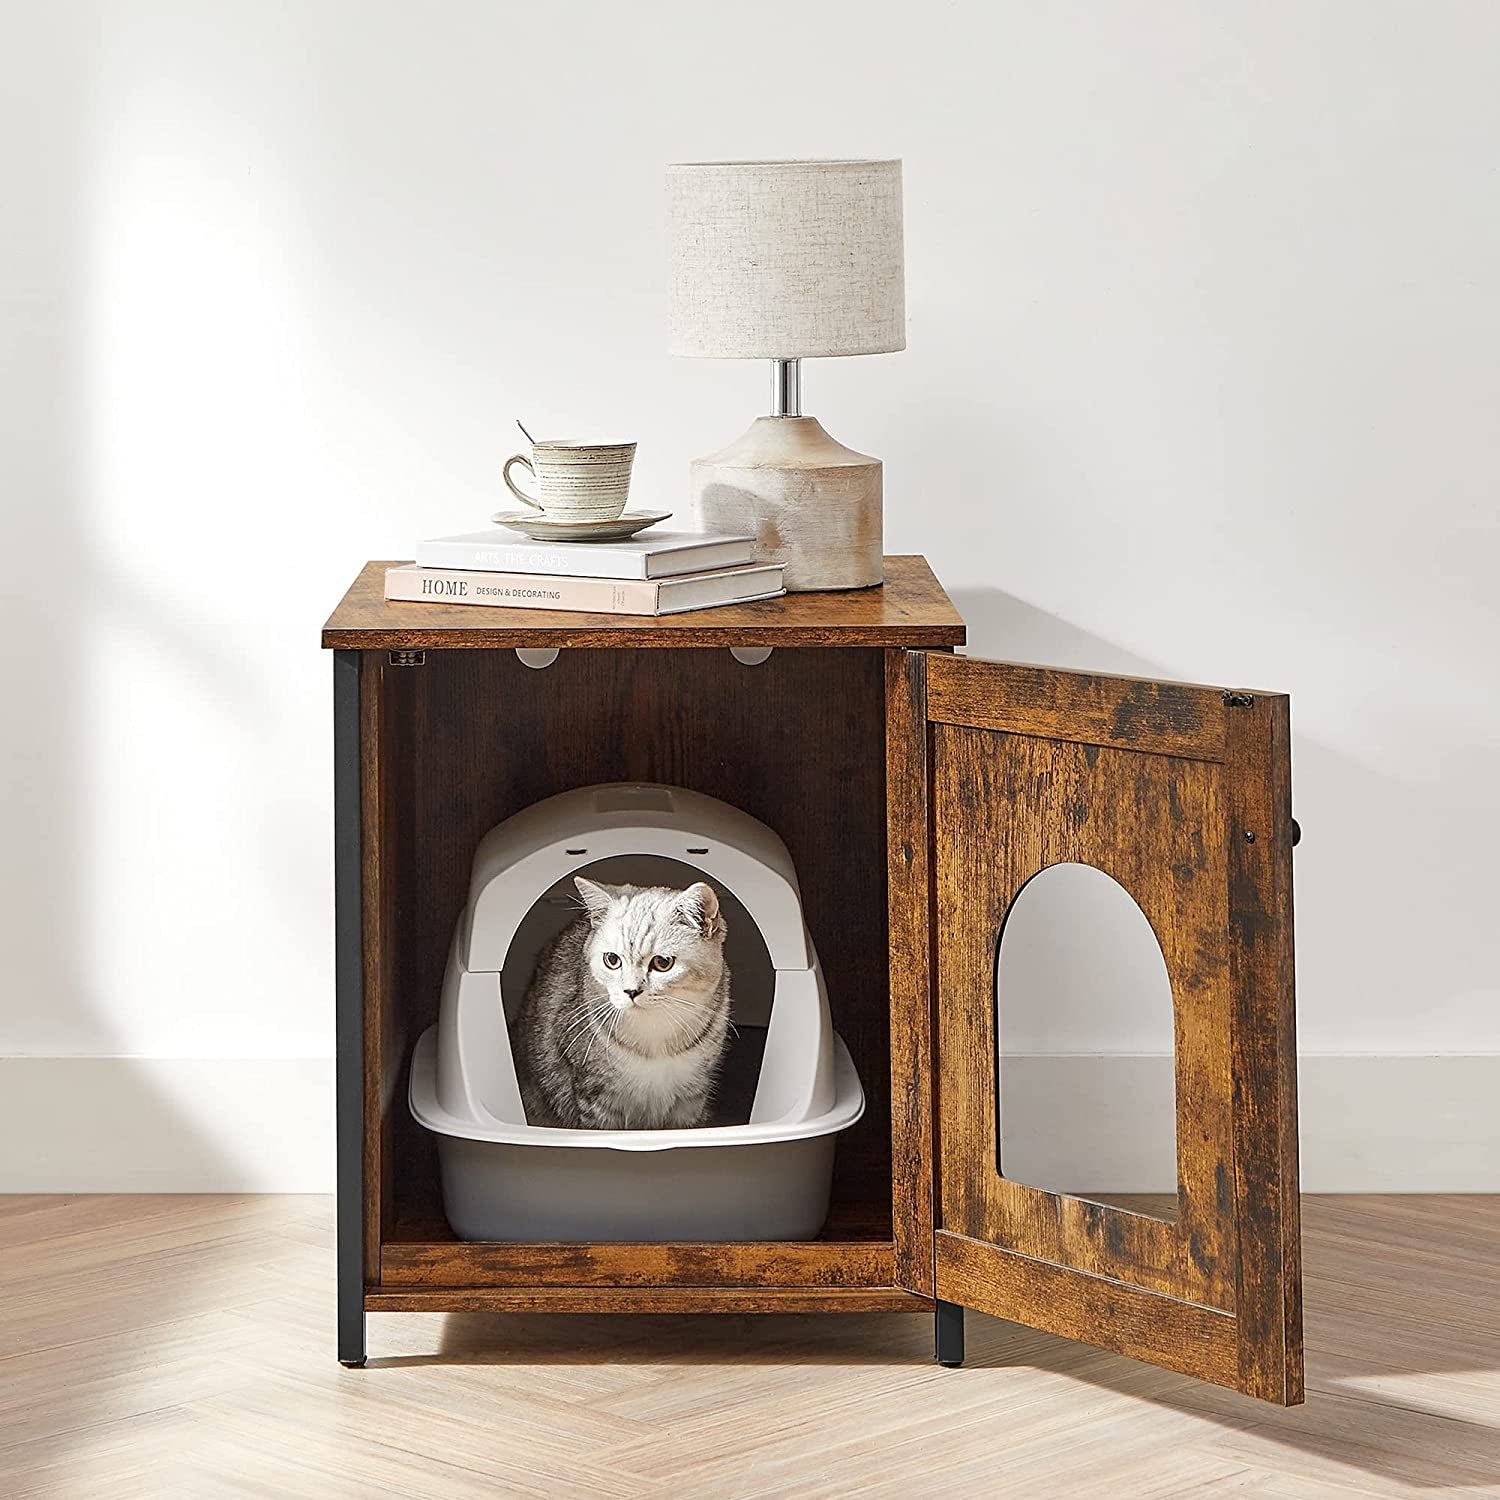 VASAGLE Cat Litter Box Furniture,Hidden Litter Box Enclosure Cabinet,Rustic Brown and Black